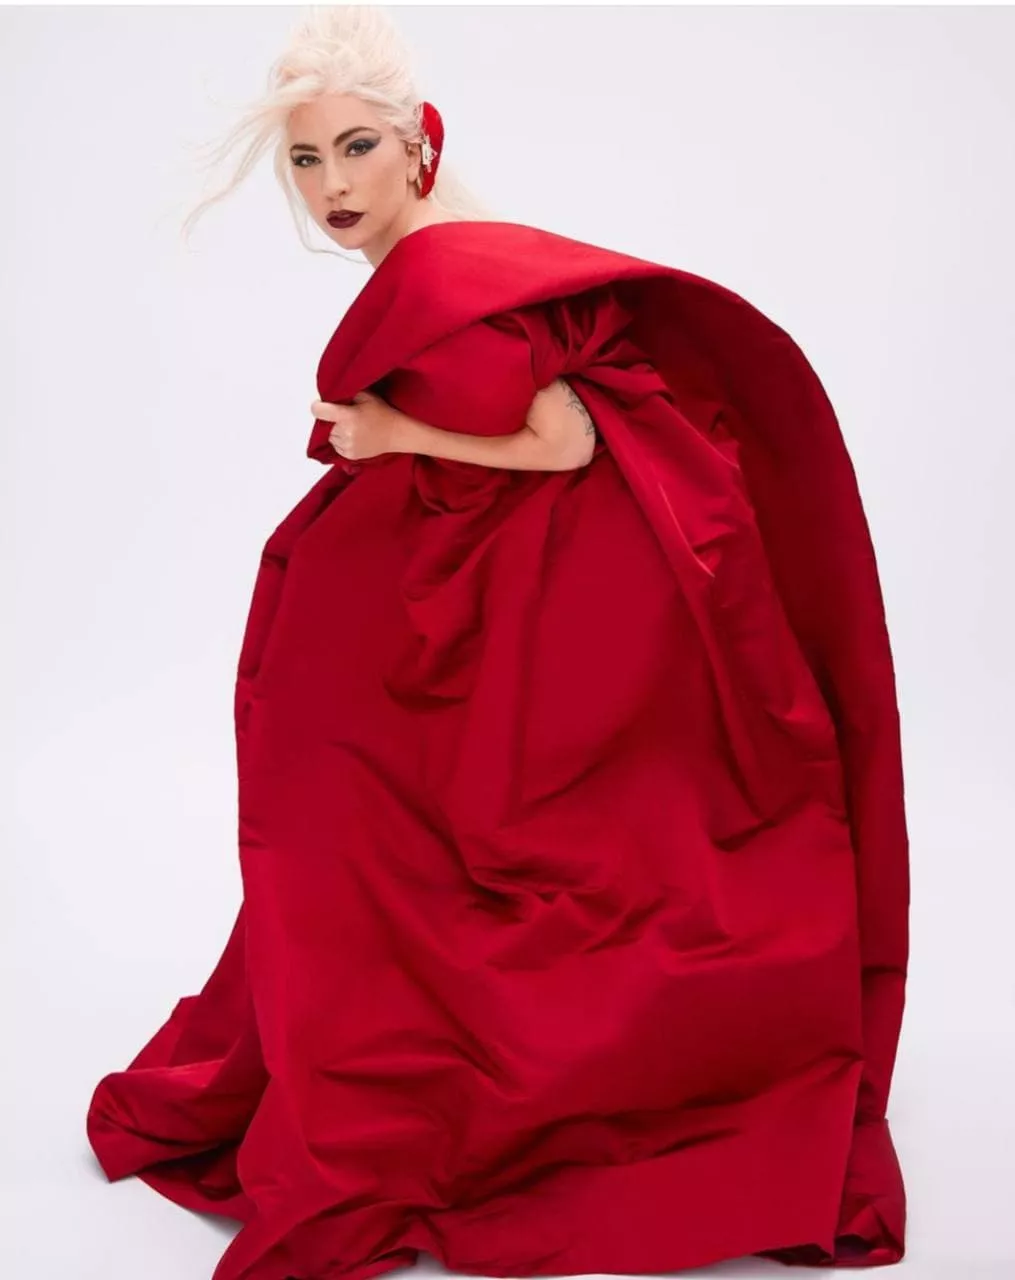 Леди Гага в рекламе Valentino Beauty